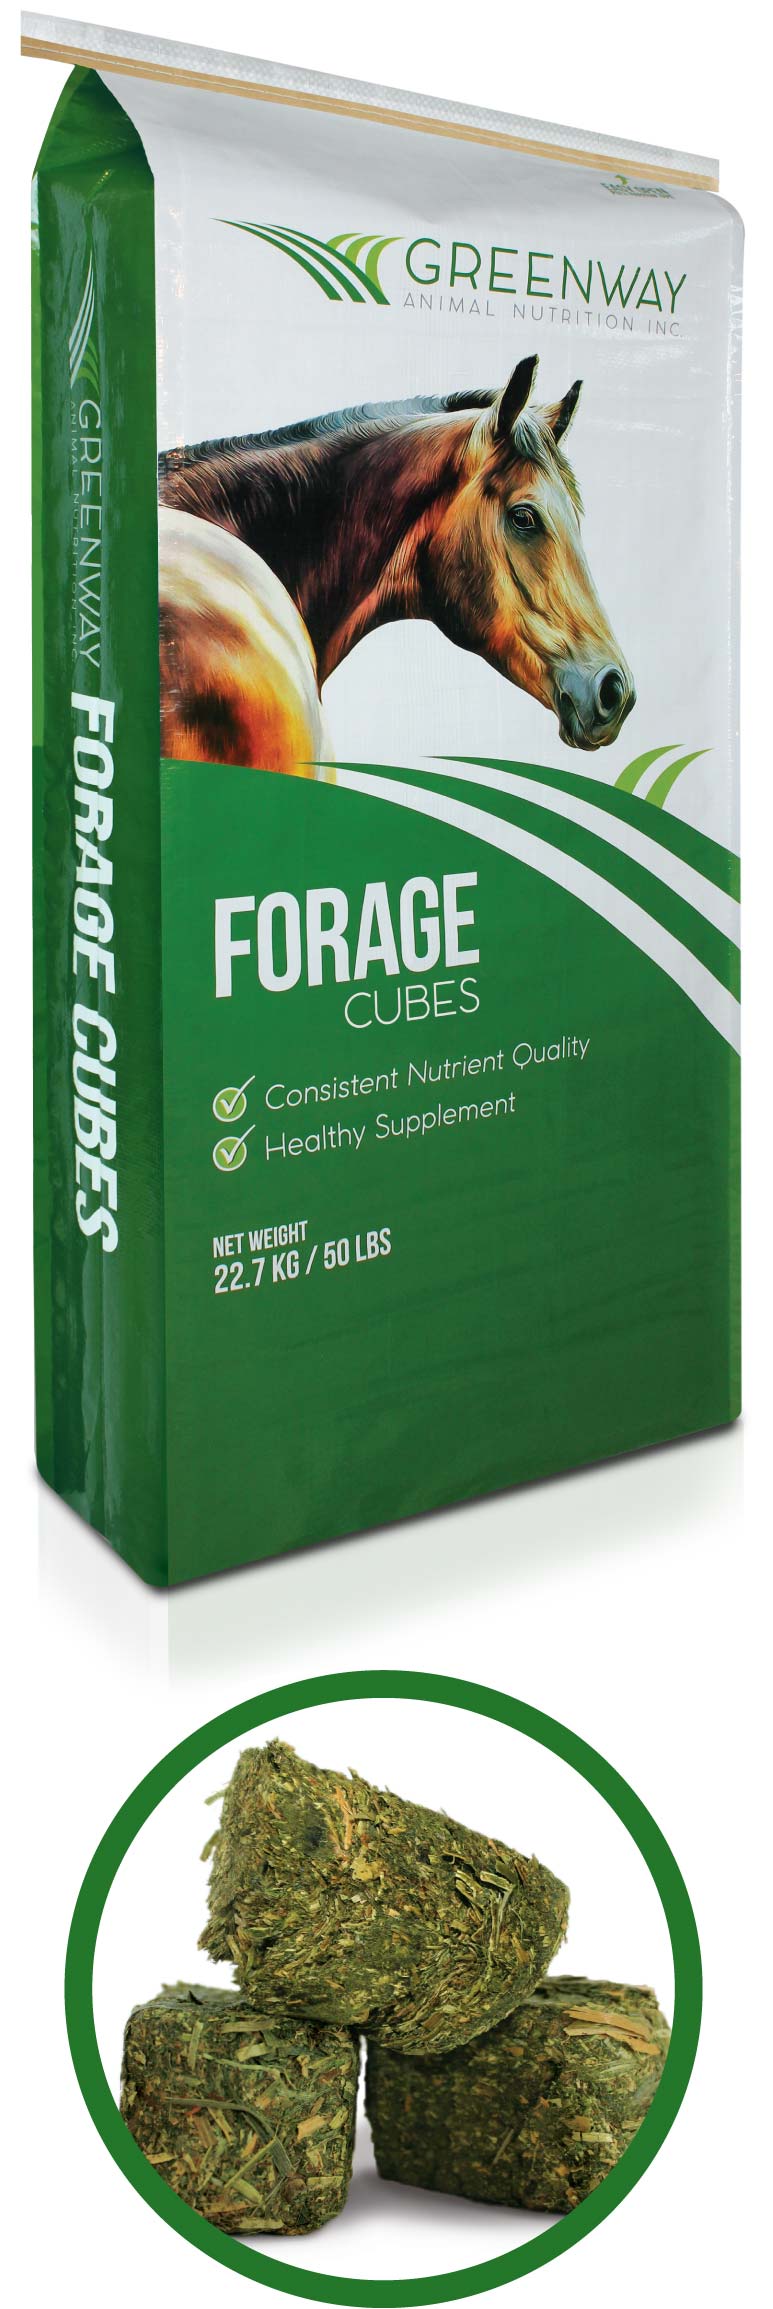 Forage Cubes